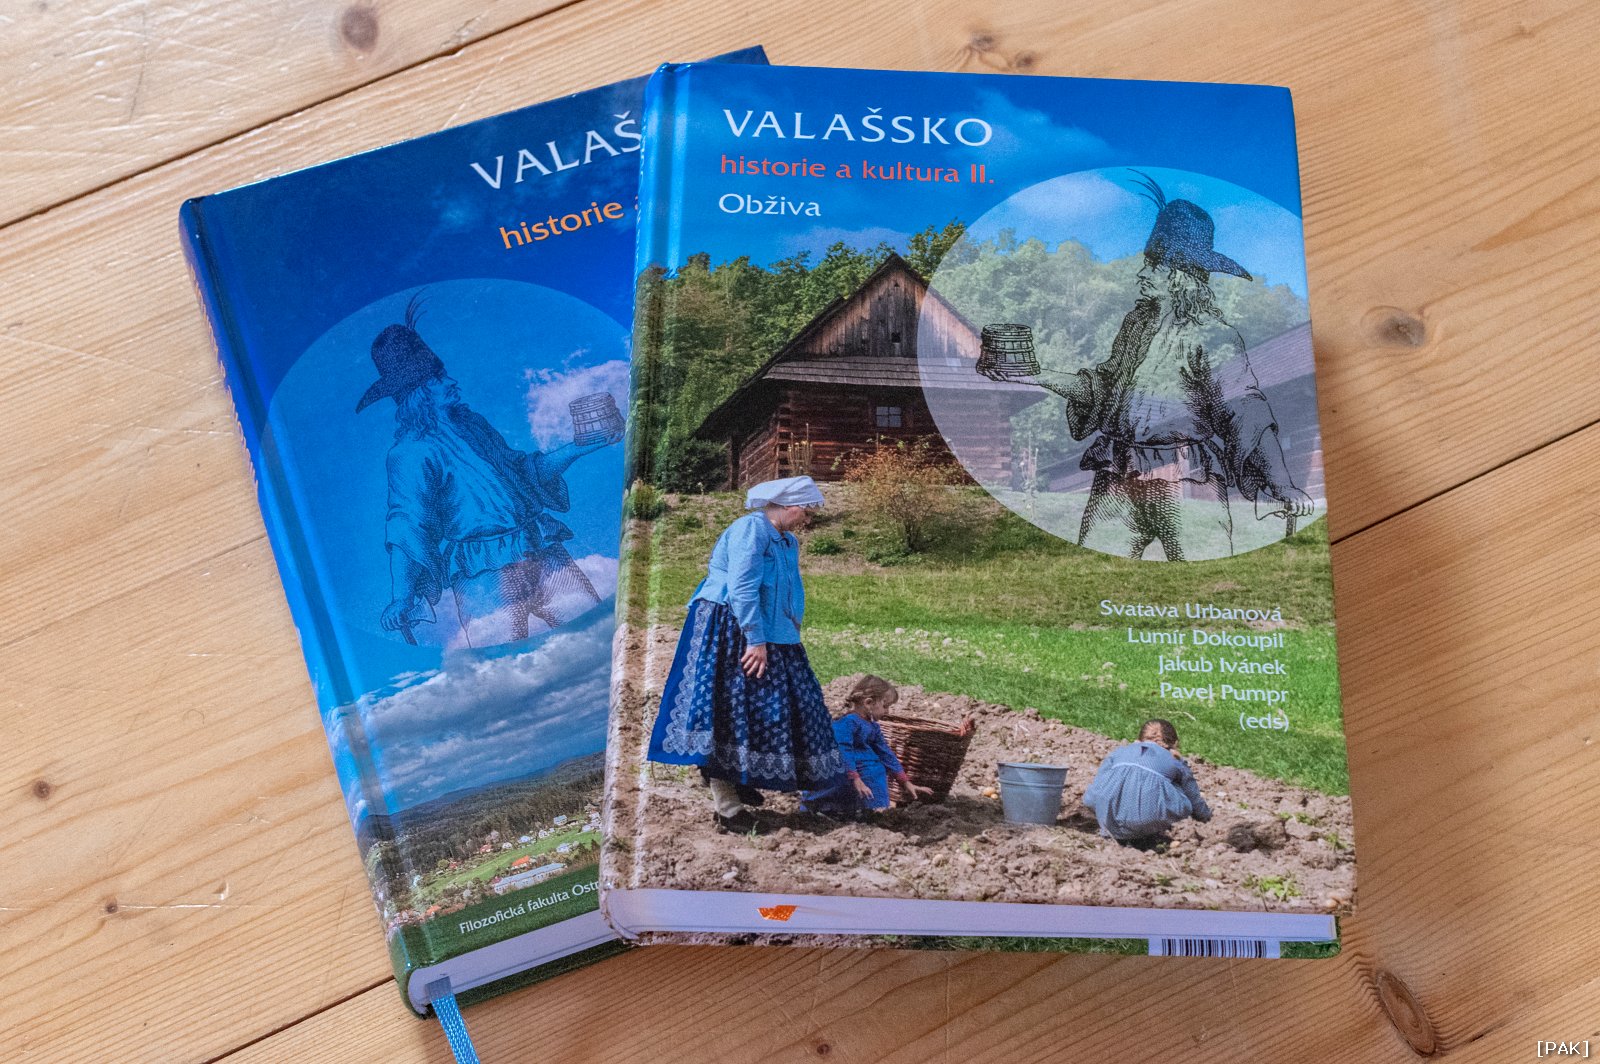 Valašsko – Historie a kultura II. OBŽIVA